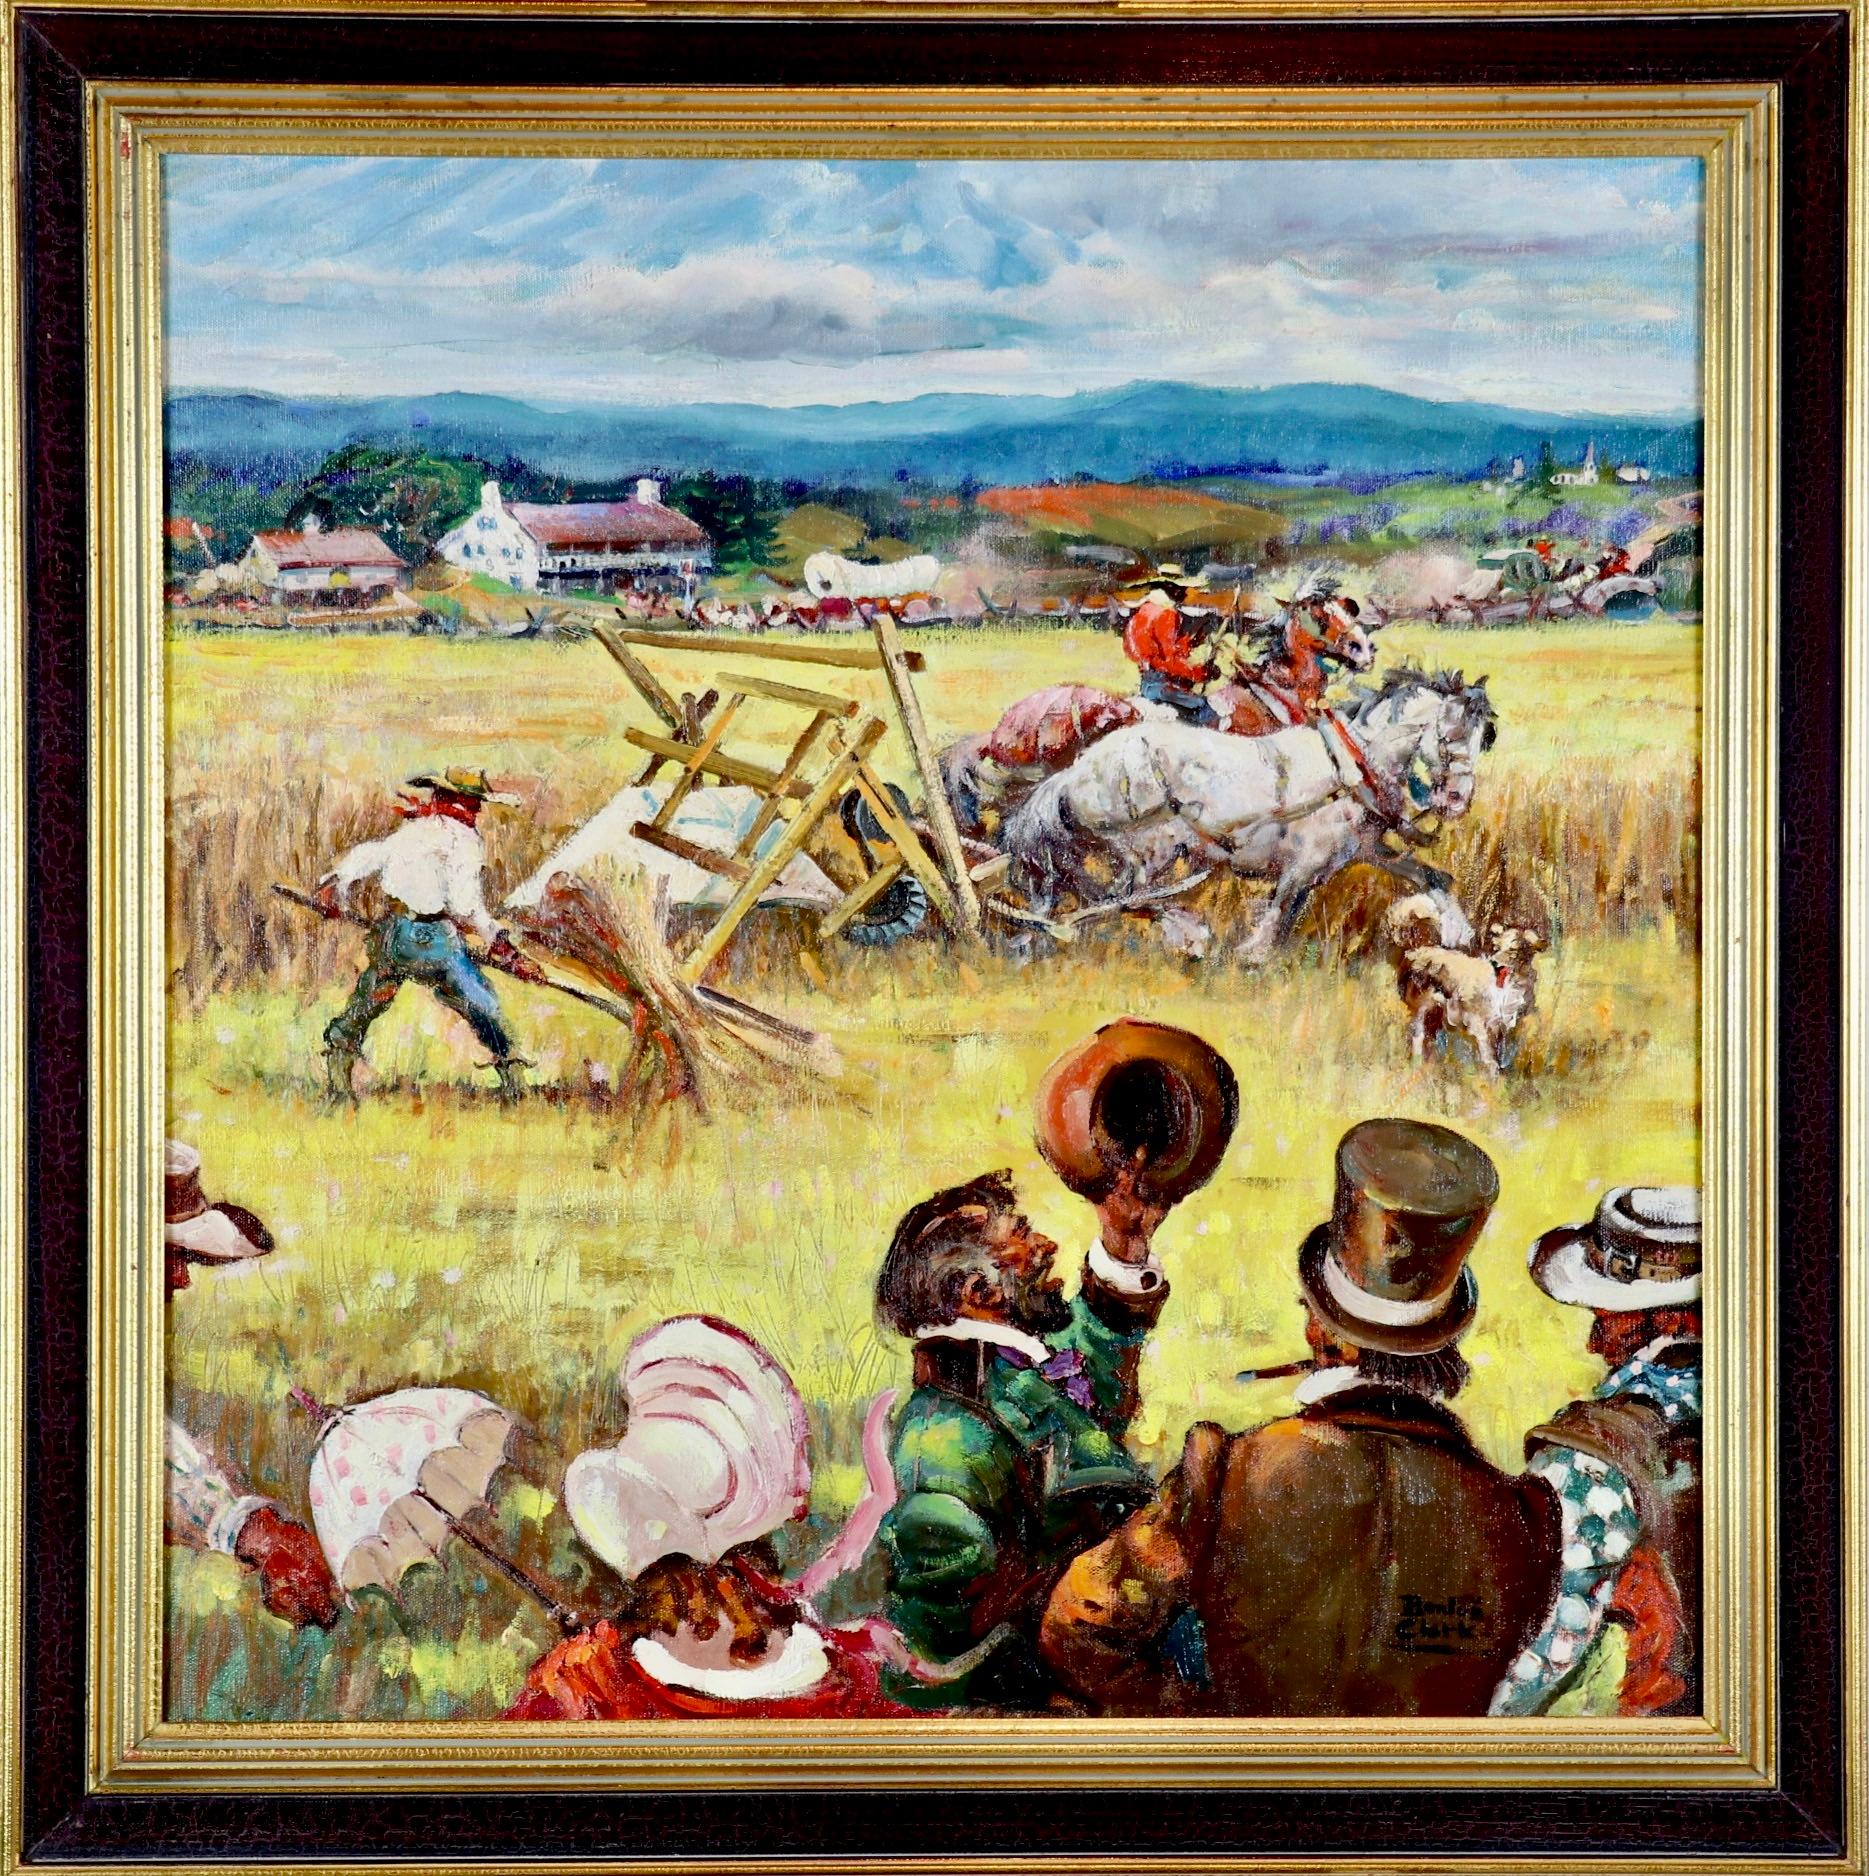 Hay-threshing - Painting by Benton Clark